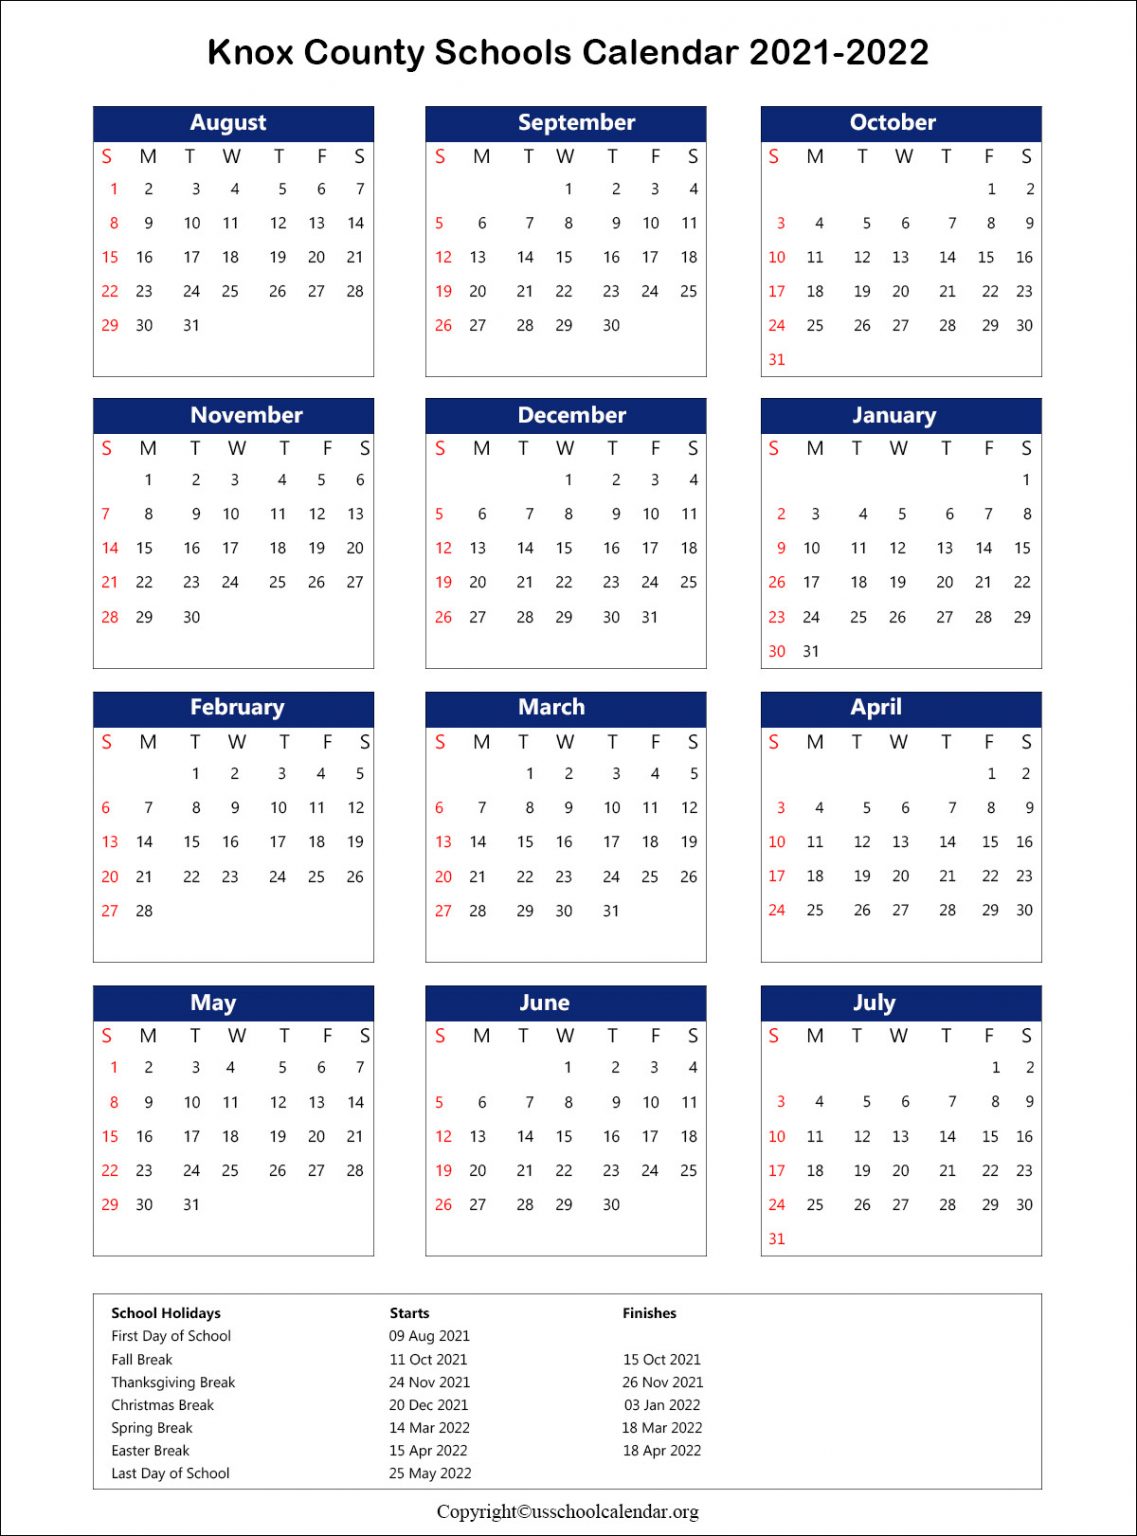 Knox County Schools Calendar with Holidays 2021-2022